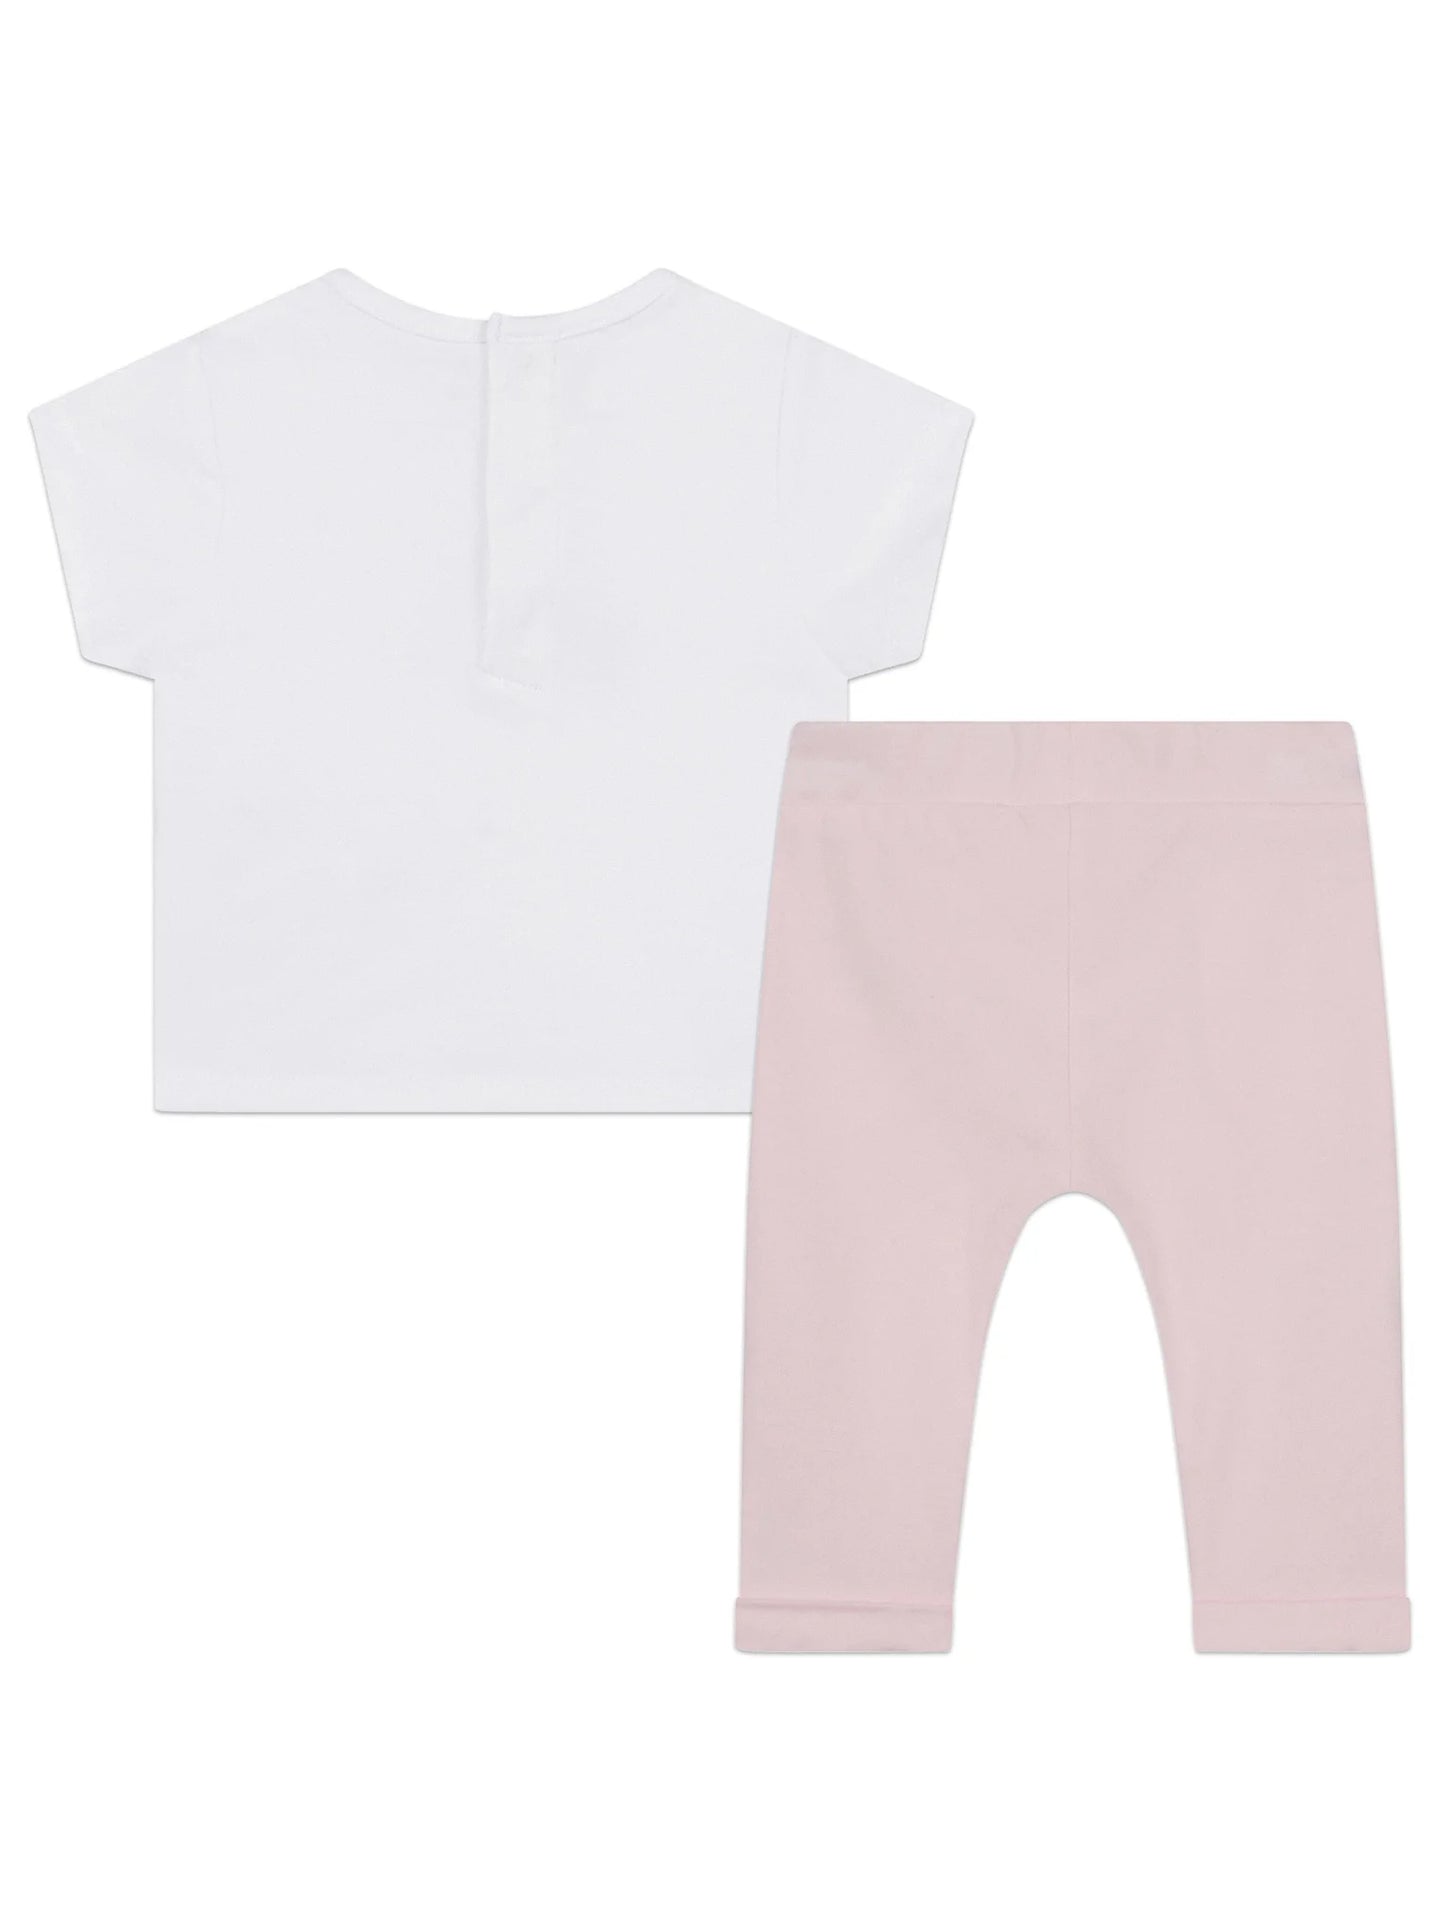 Choupette White/Pink Baby Set